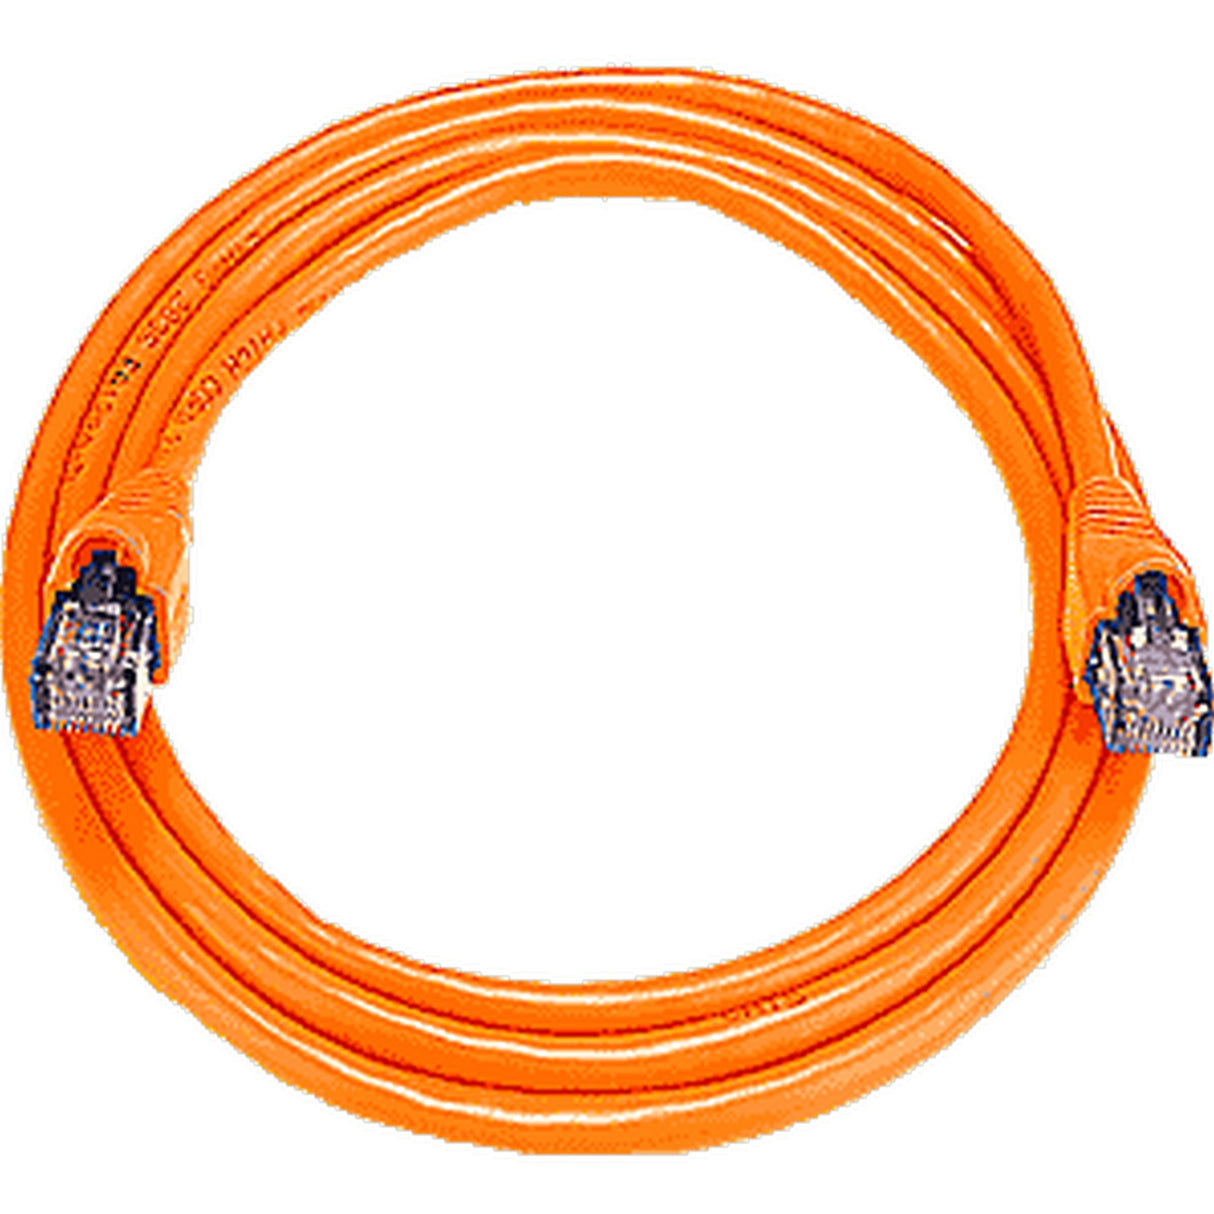 NTI CAT5-7-ORANGE CAT5 Cable, Male to Male, Orange, 7-Foot